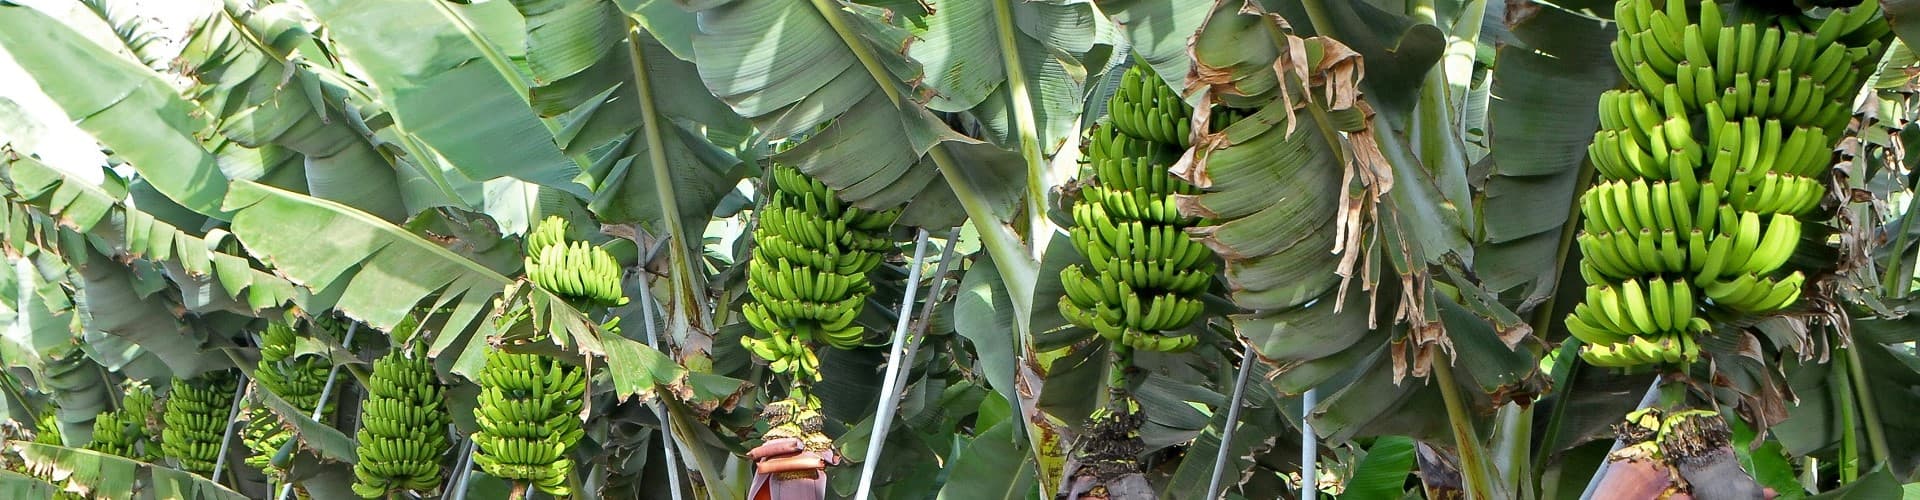 Free Banana Plantation Tour Tenerife Banner